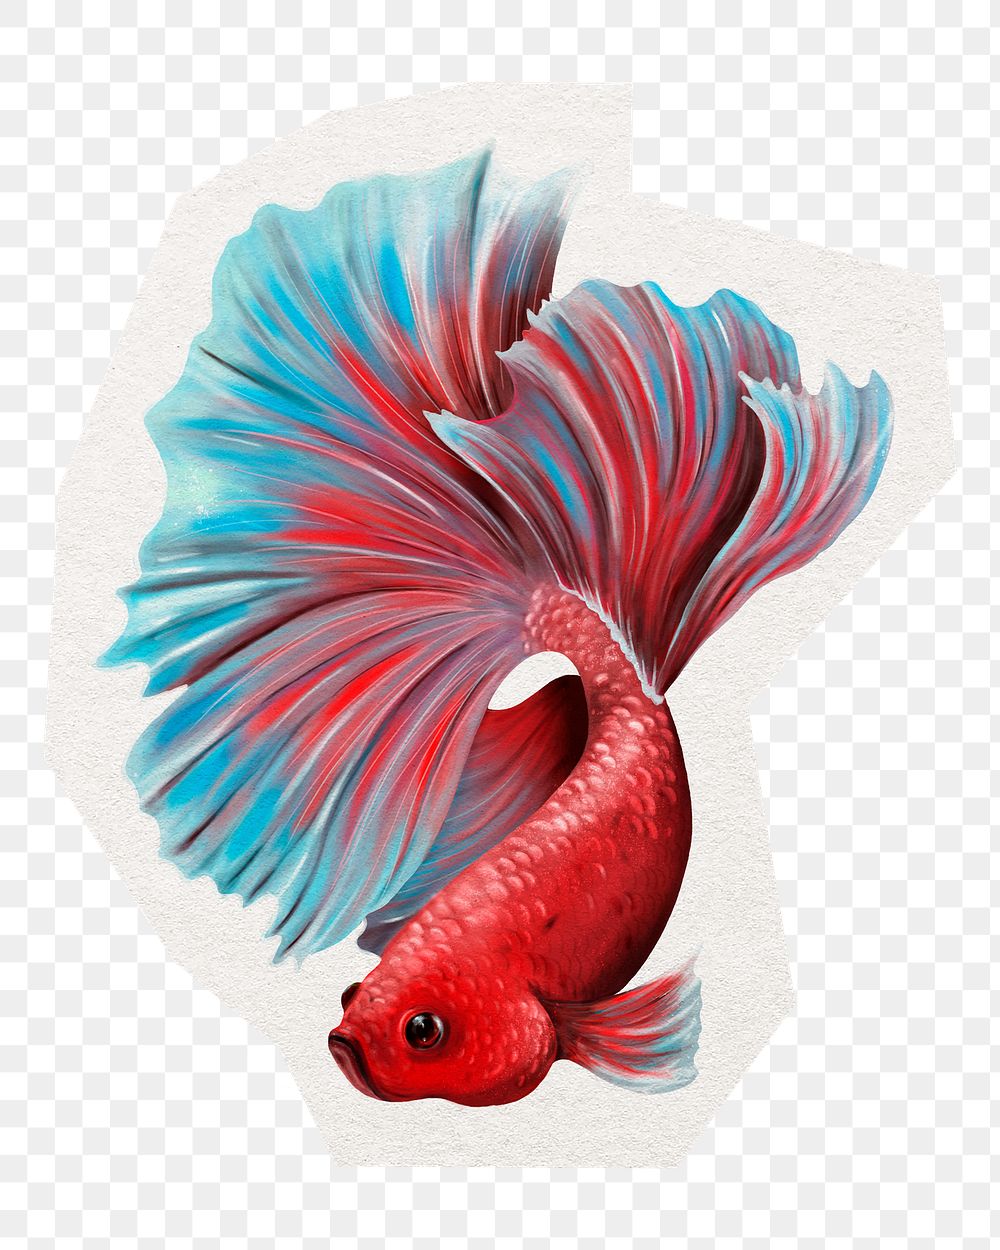 Colorful betta fish png sticker, cut out paper design, transparent background